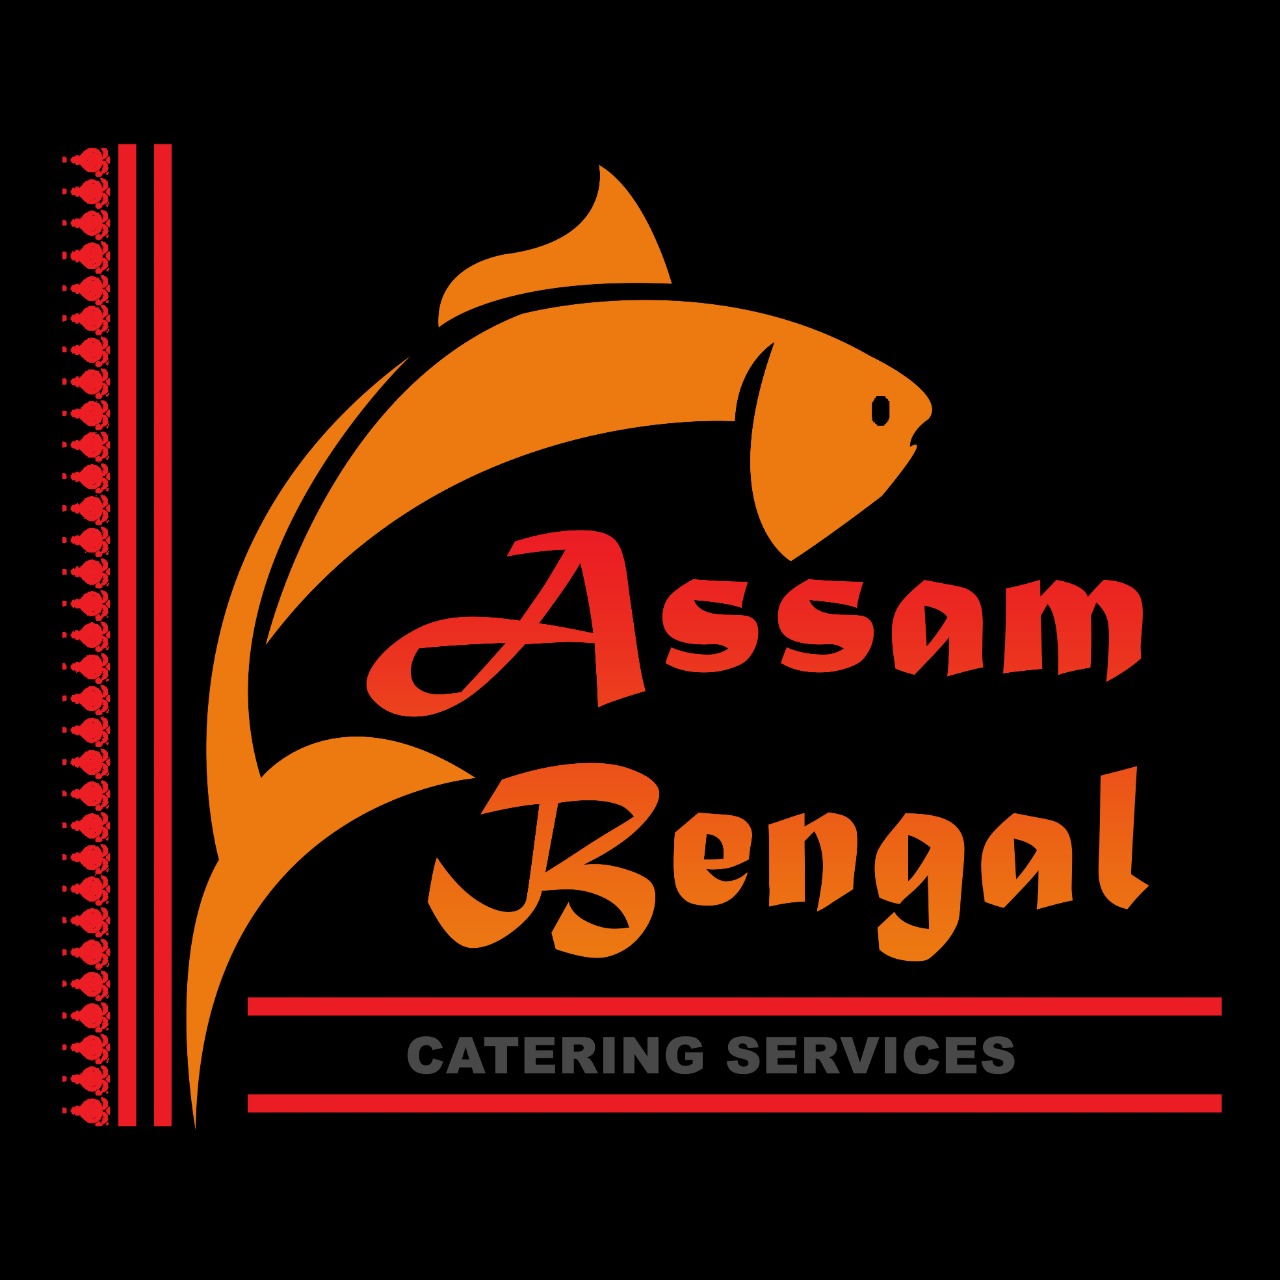 assam bengal catering service - Logo